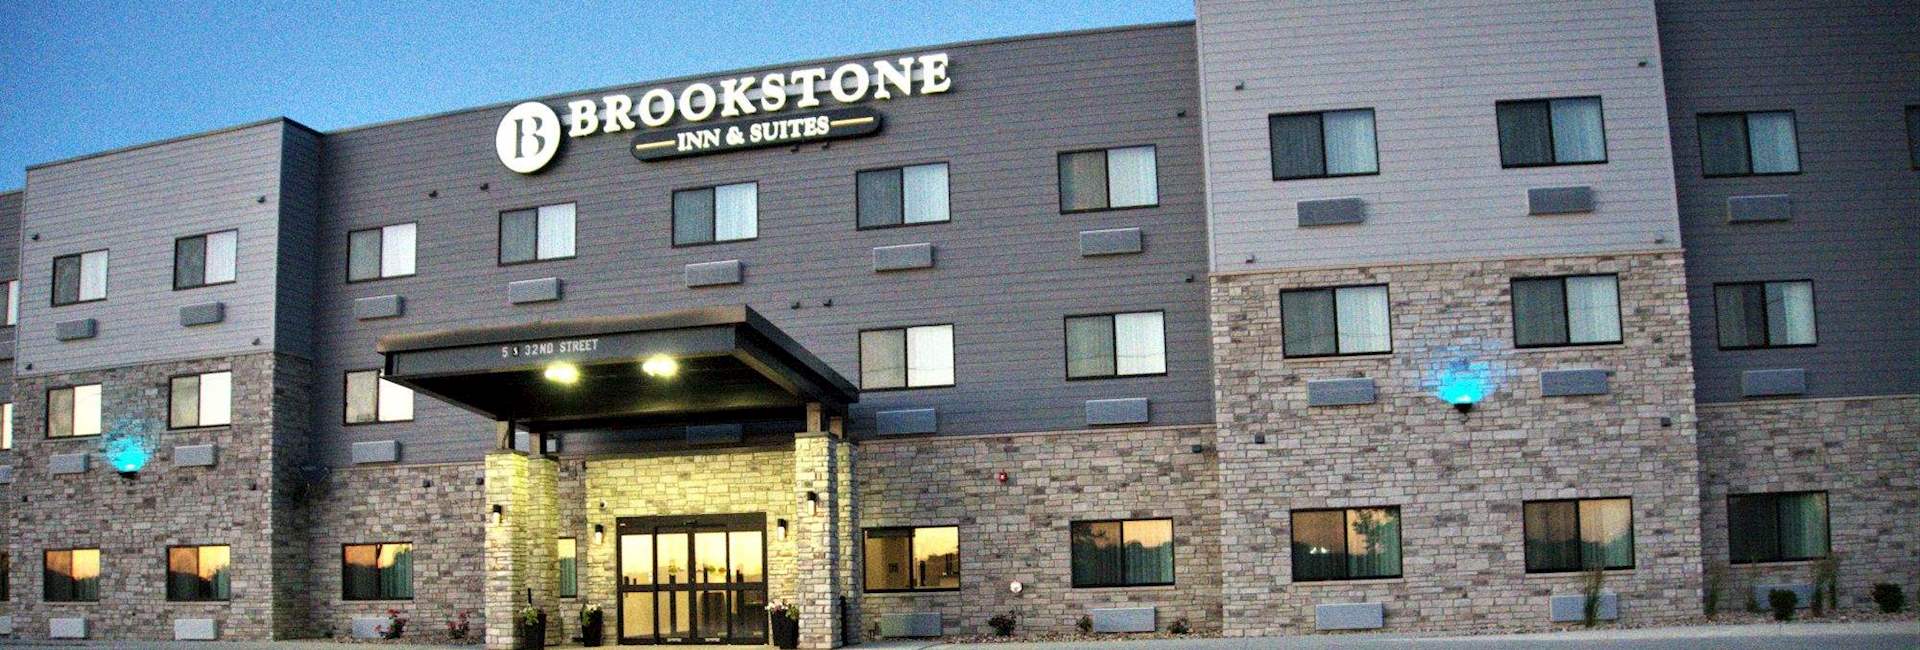 Brookstone Inn & Suites Fort Dodge, Iowa